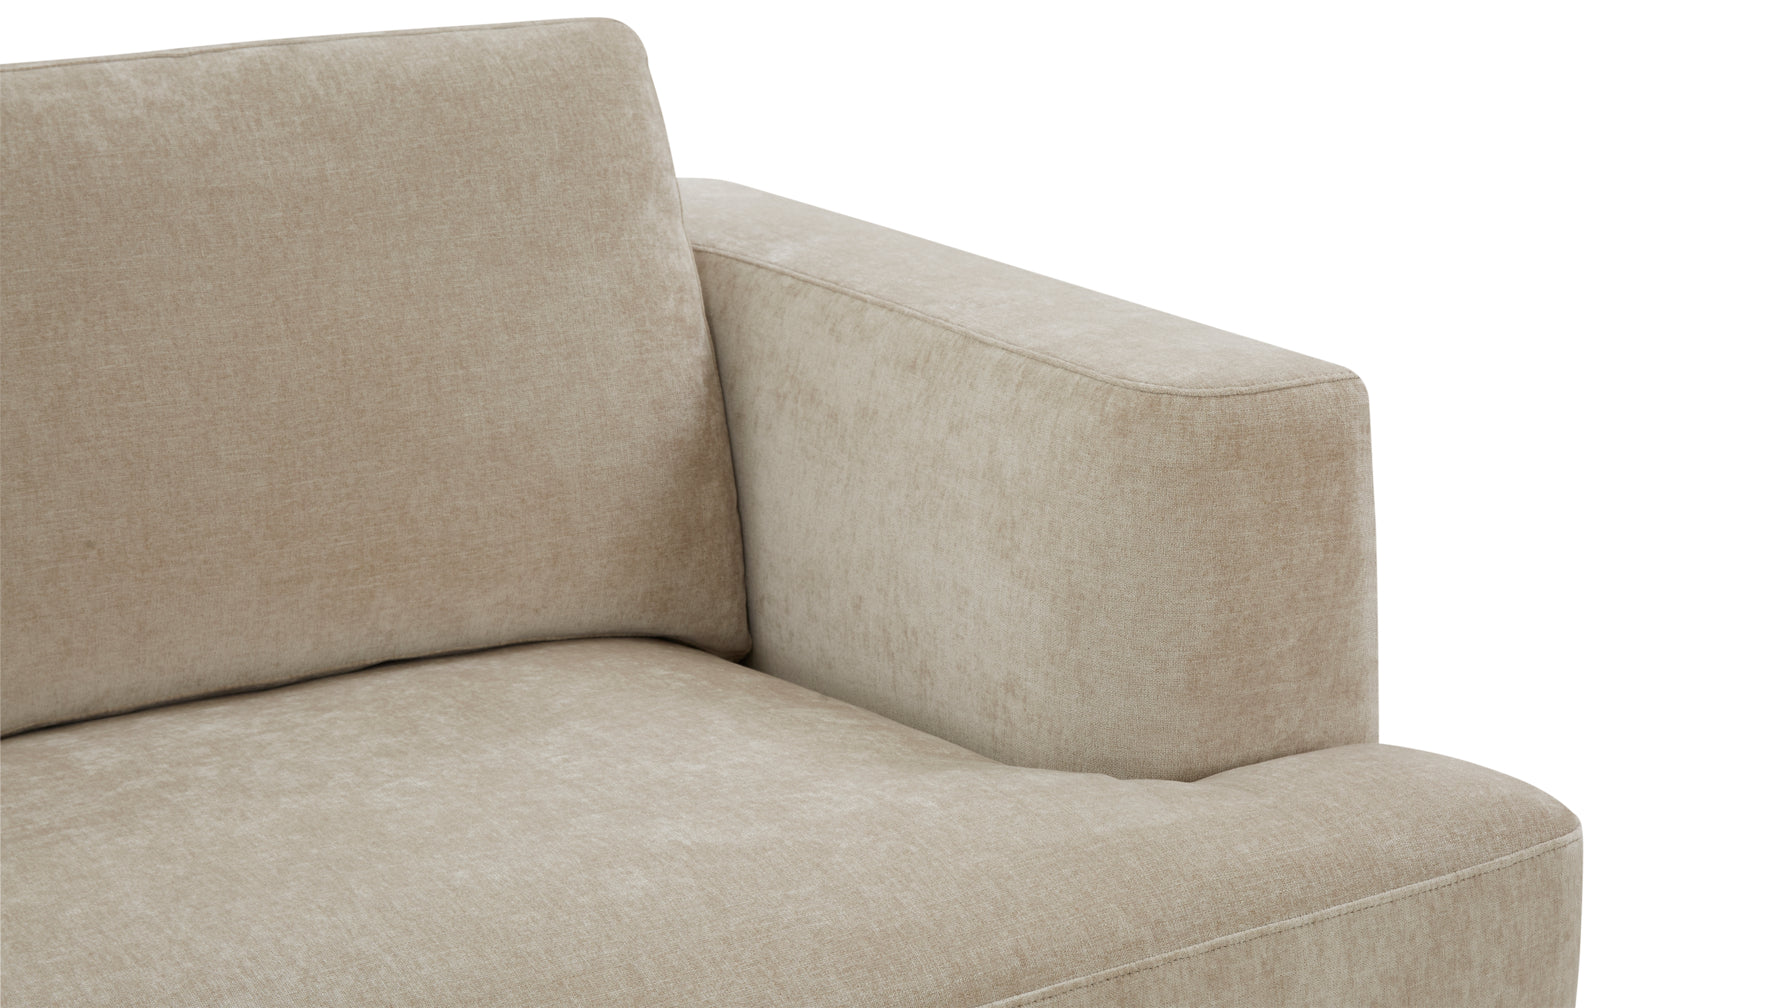 Good Company Sofa, 2 Seater, Cashew - Image 5